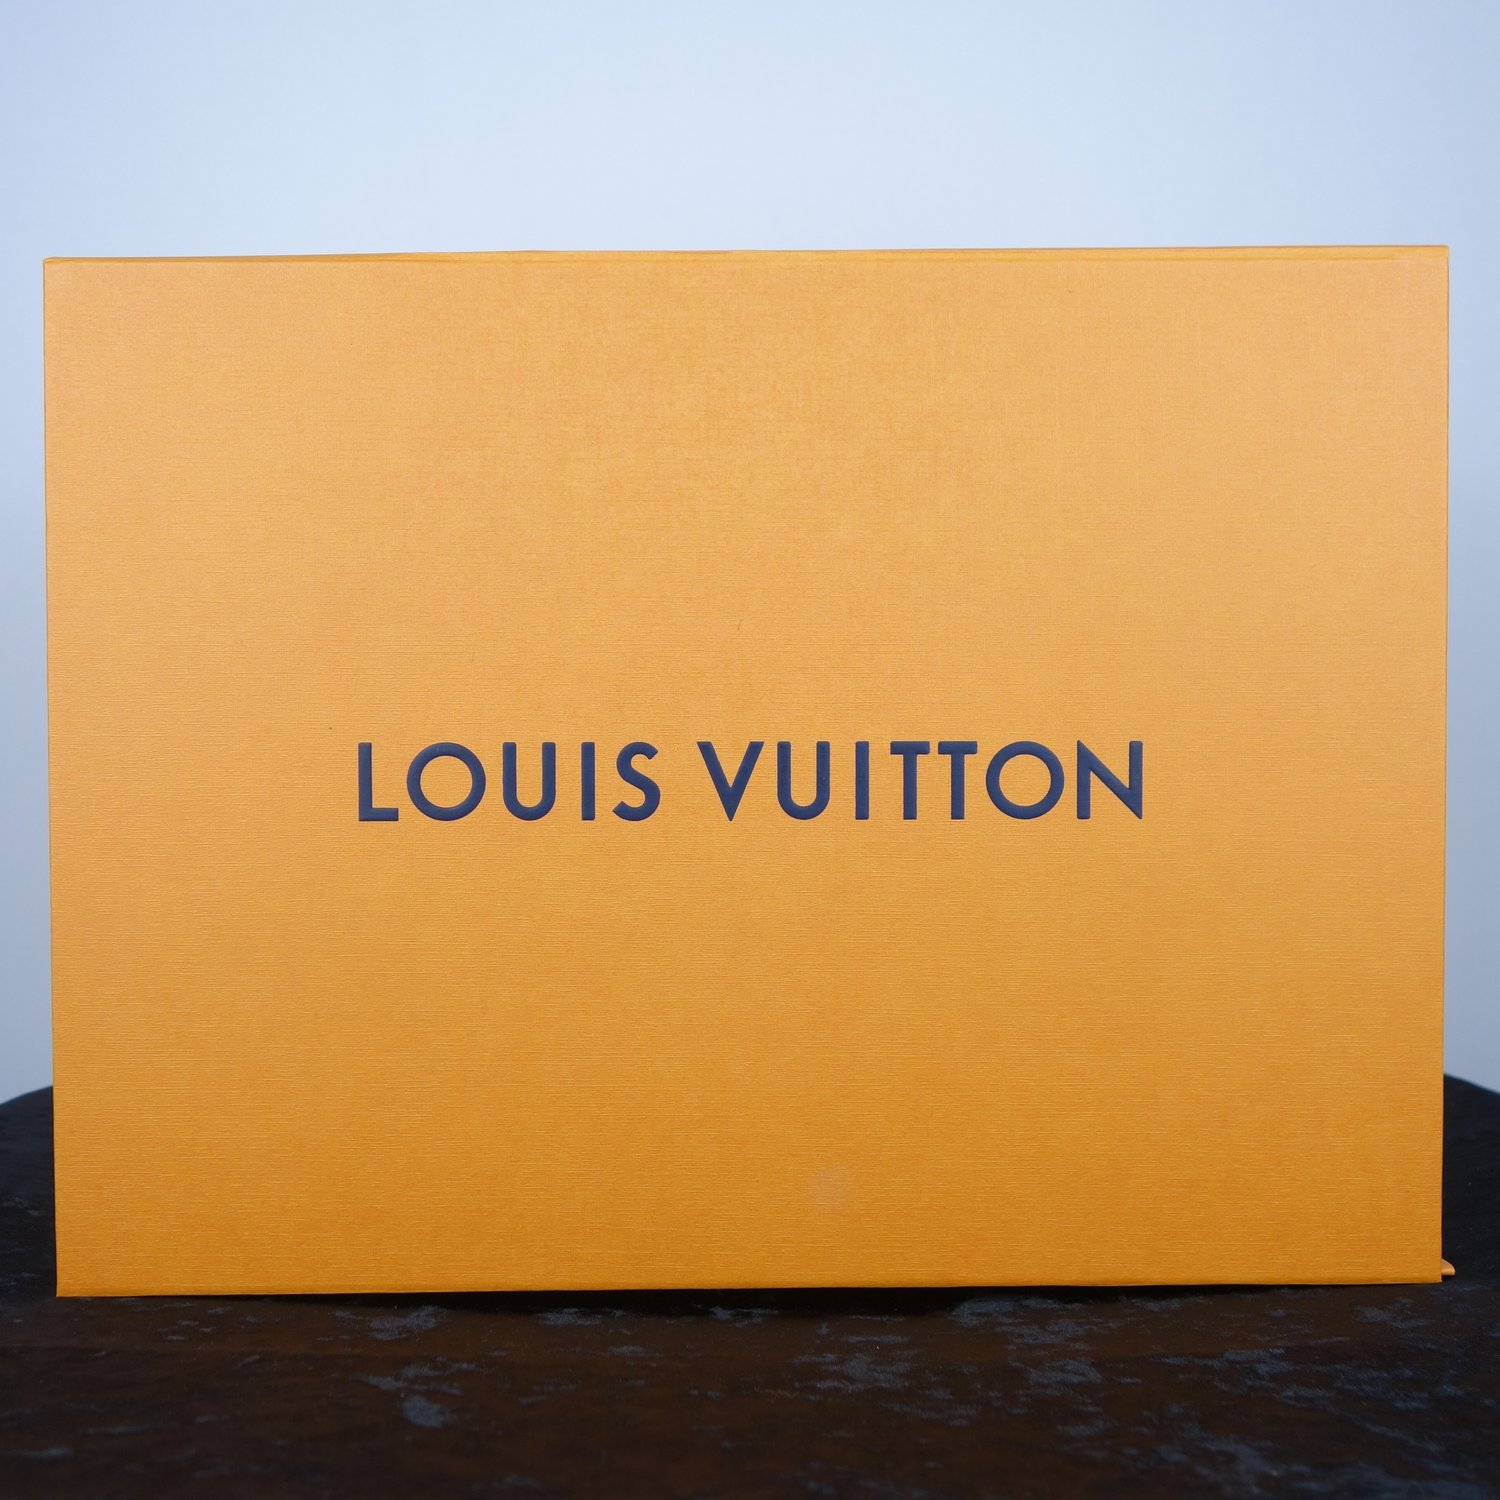 LOUIS VUITTON EMPTY GIFT BOX / LOUIS VUITTON AUTHENTIC ORANGE GIFT BOX  FOLDABLE